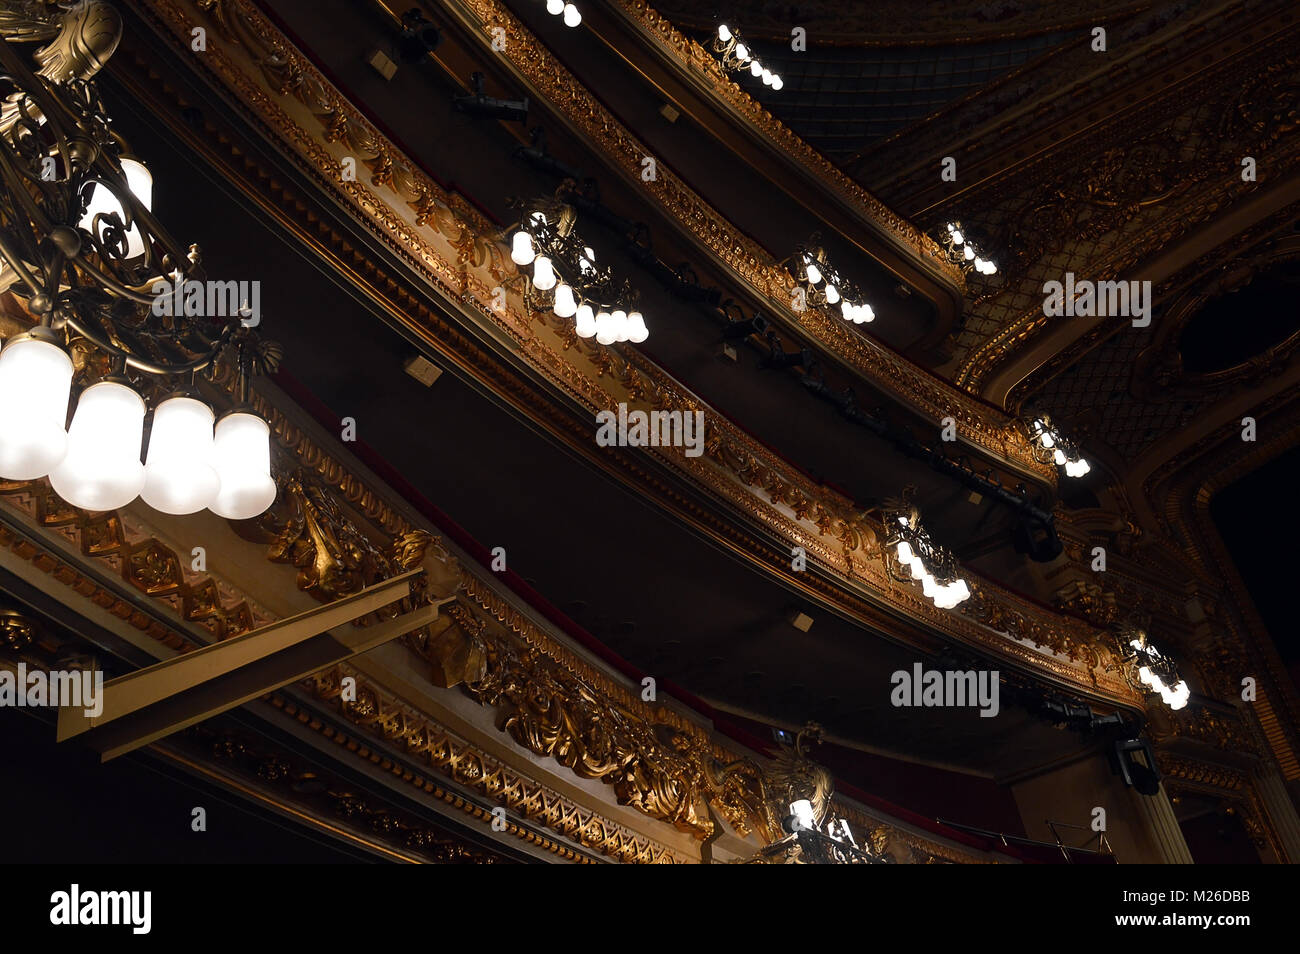 BARCELONA - 11. FEBRUAR 2017: Beleuchtete oberen Kreis (ohne Zuschauer) im Opernhaus Liceu. Stockfoto